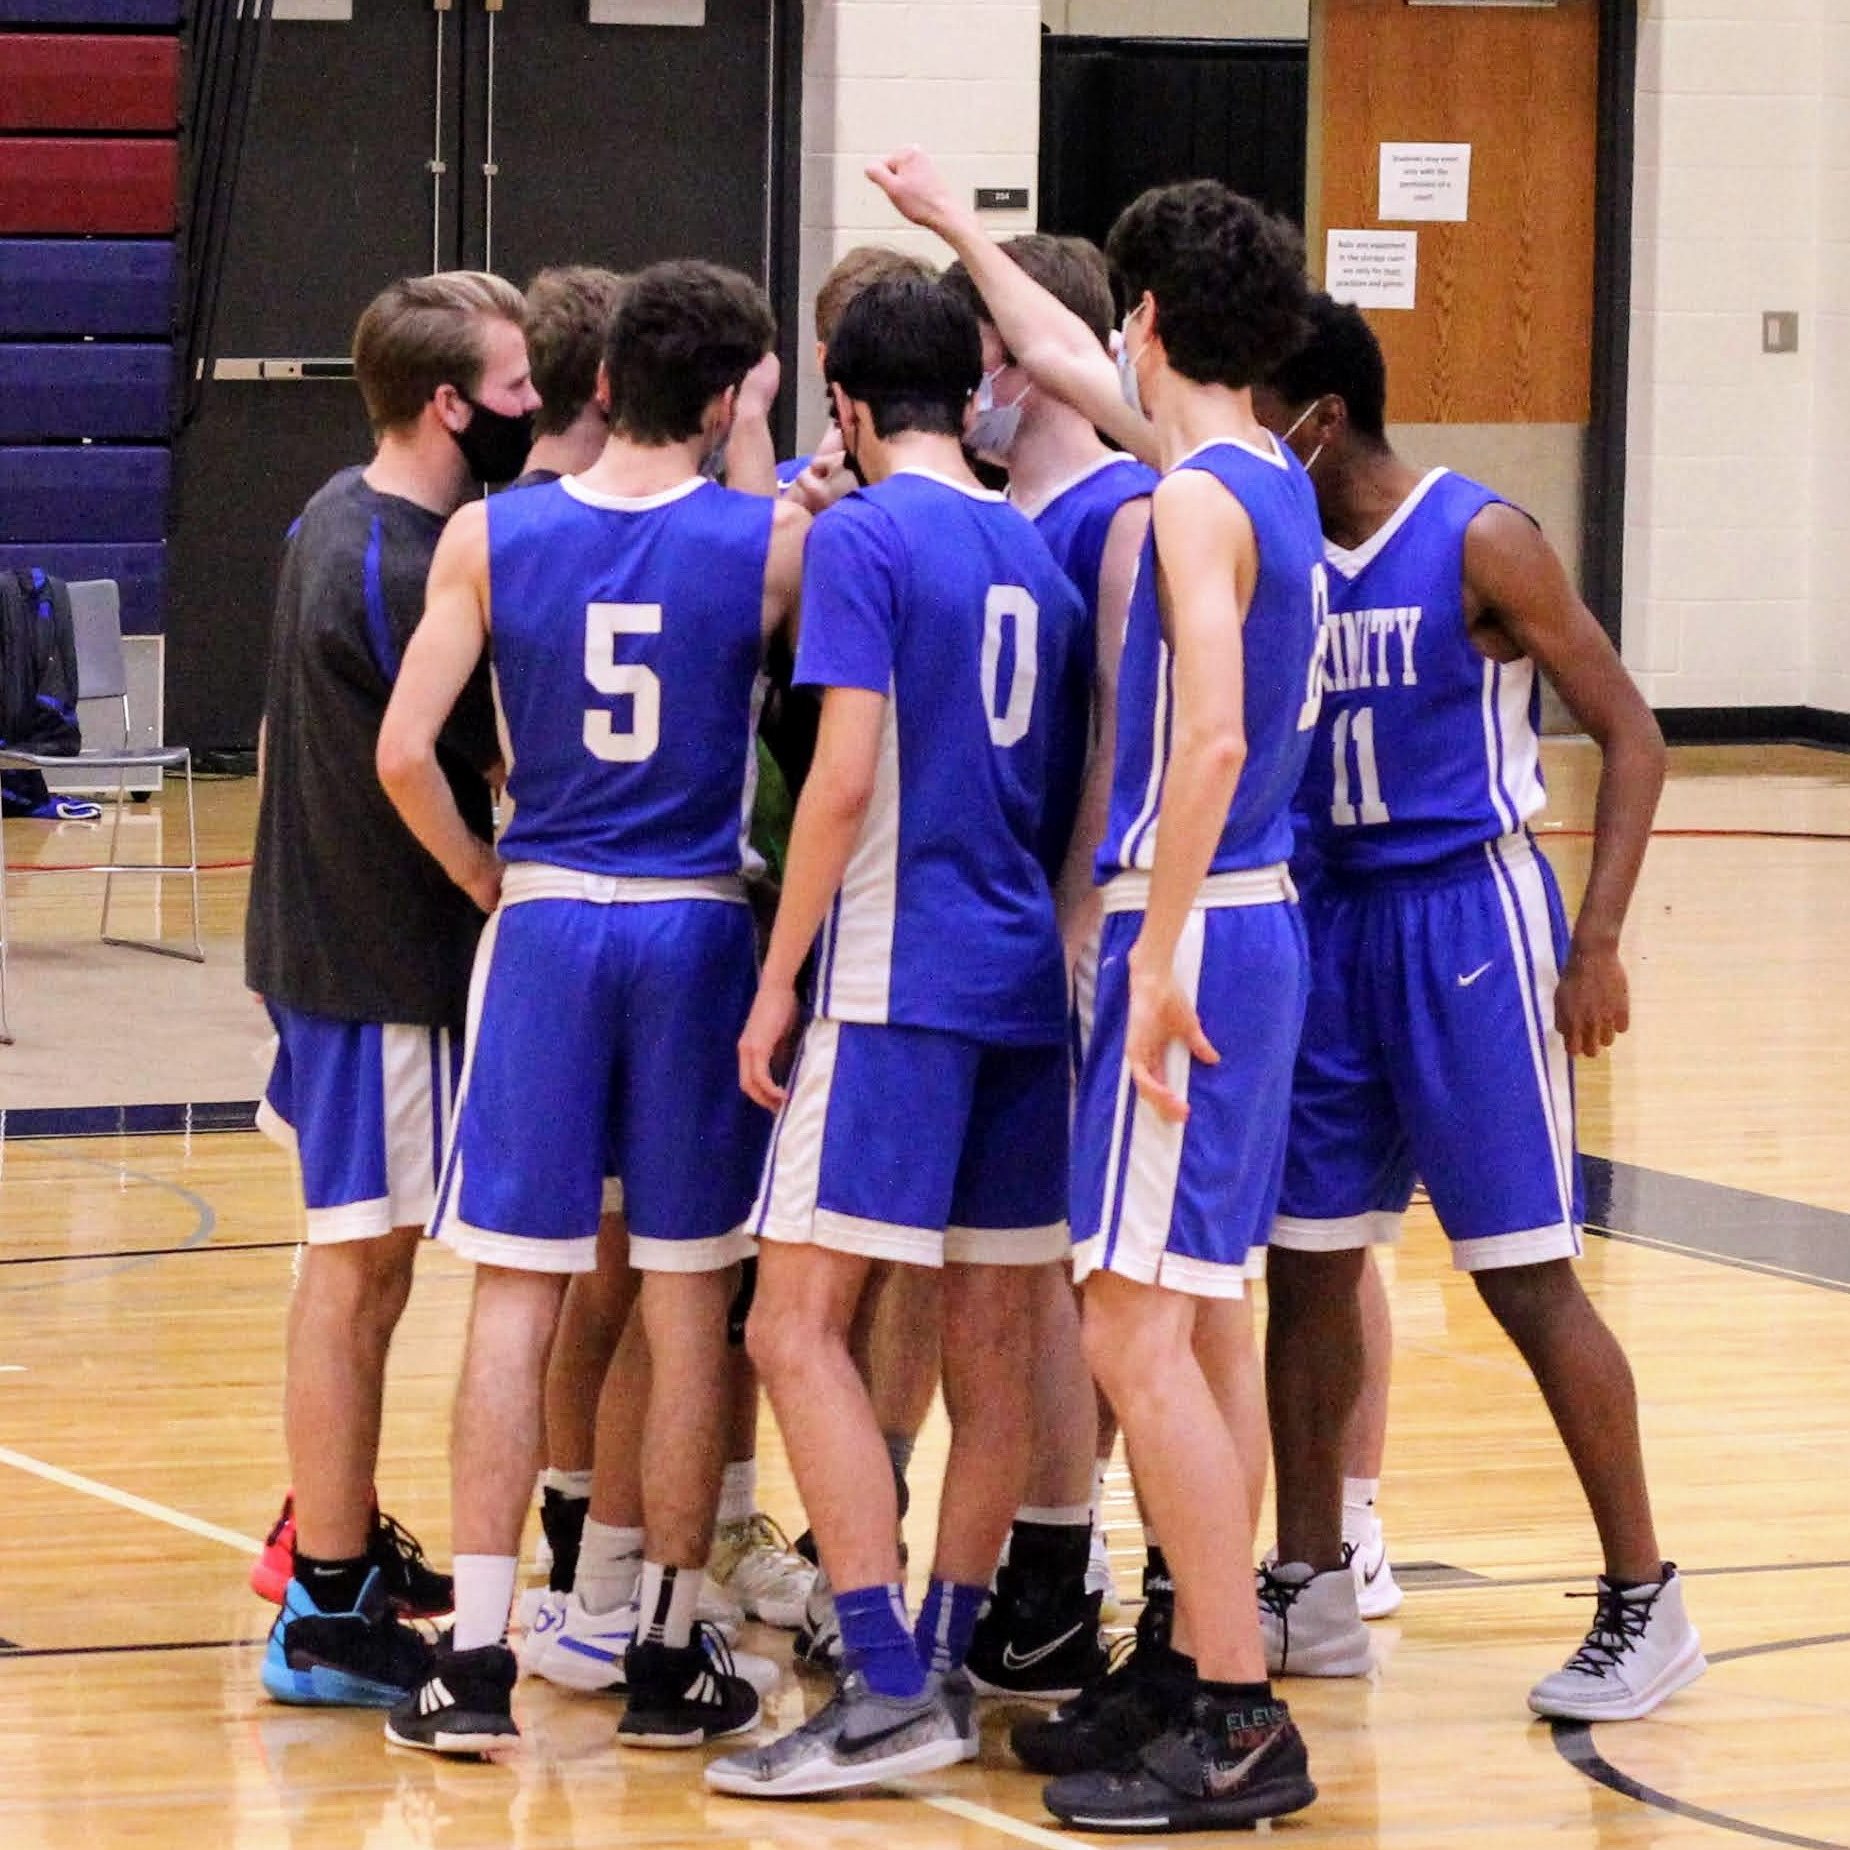 Boys' Basketball - Trinity Middle School